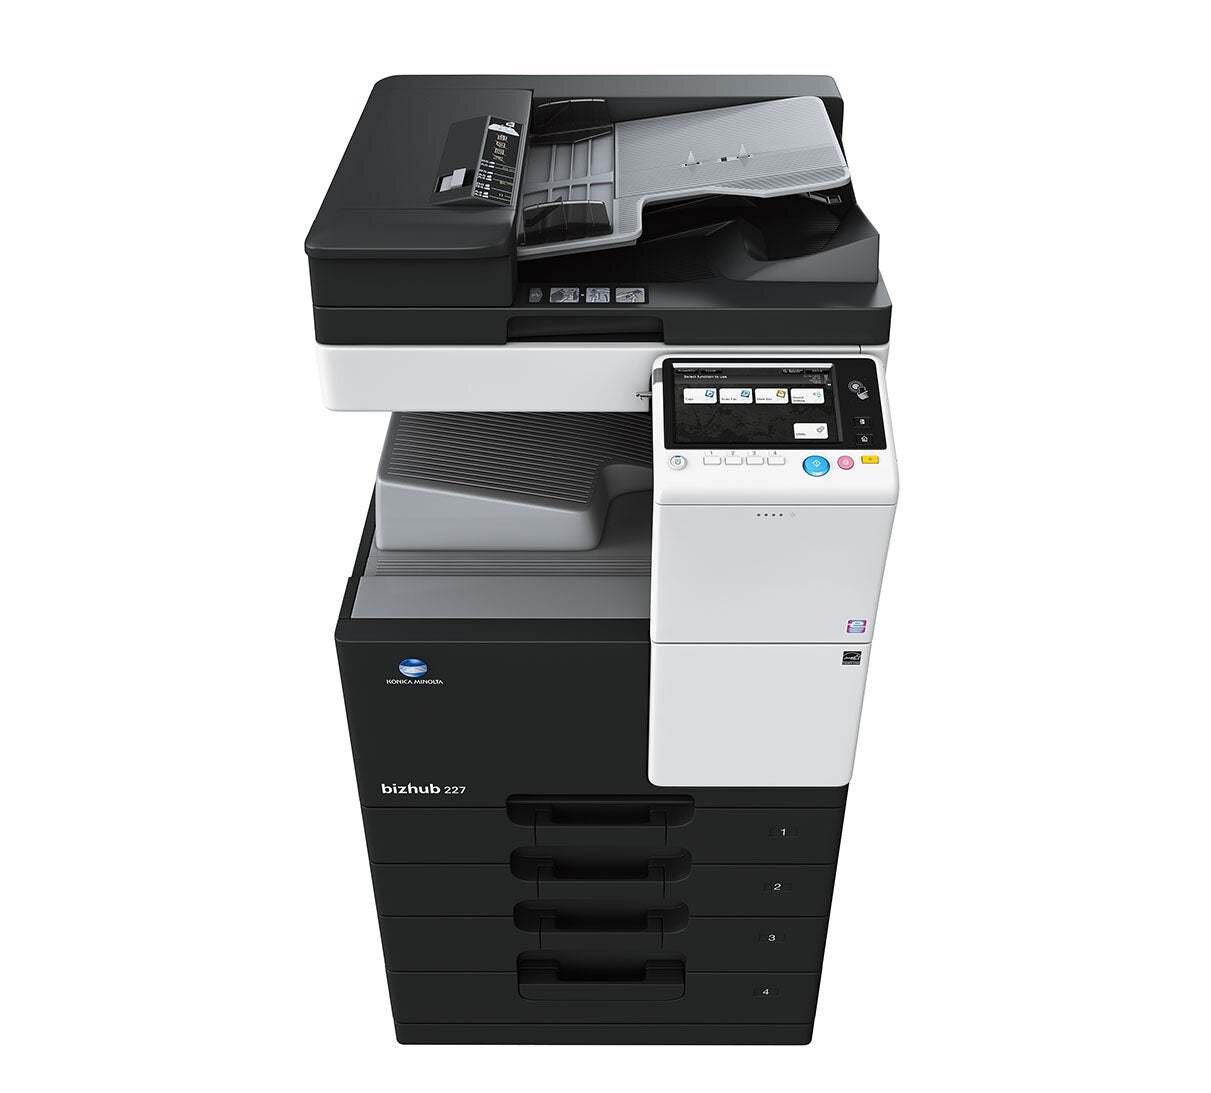 bizhub 227 Multifunctional Office Printer | KONICA MINOLTA